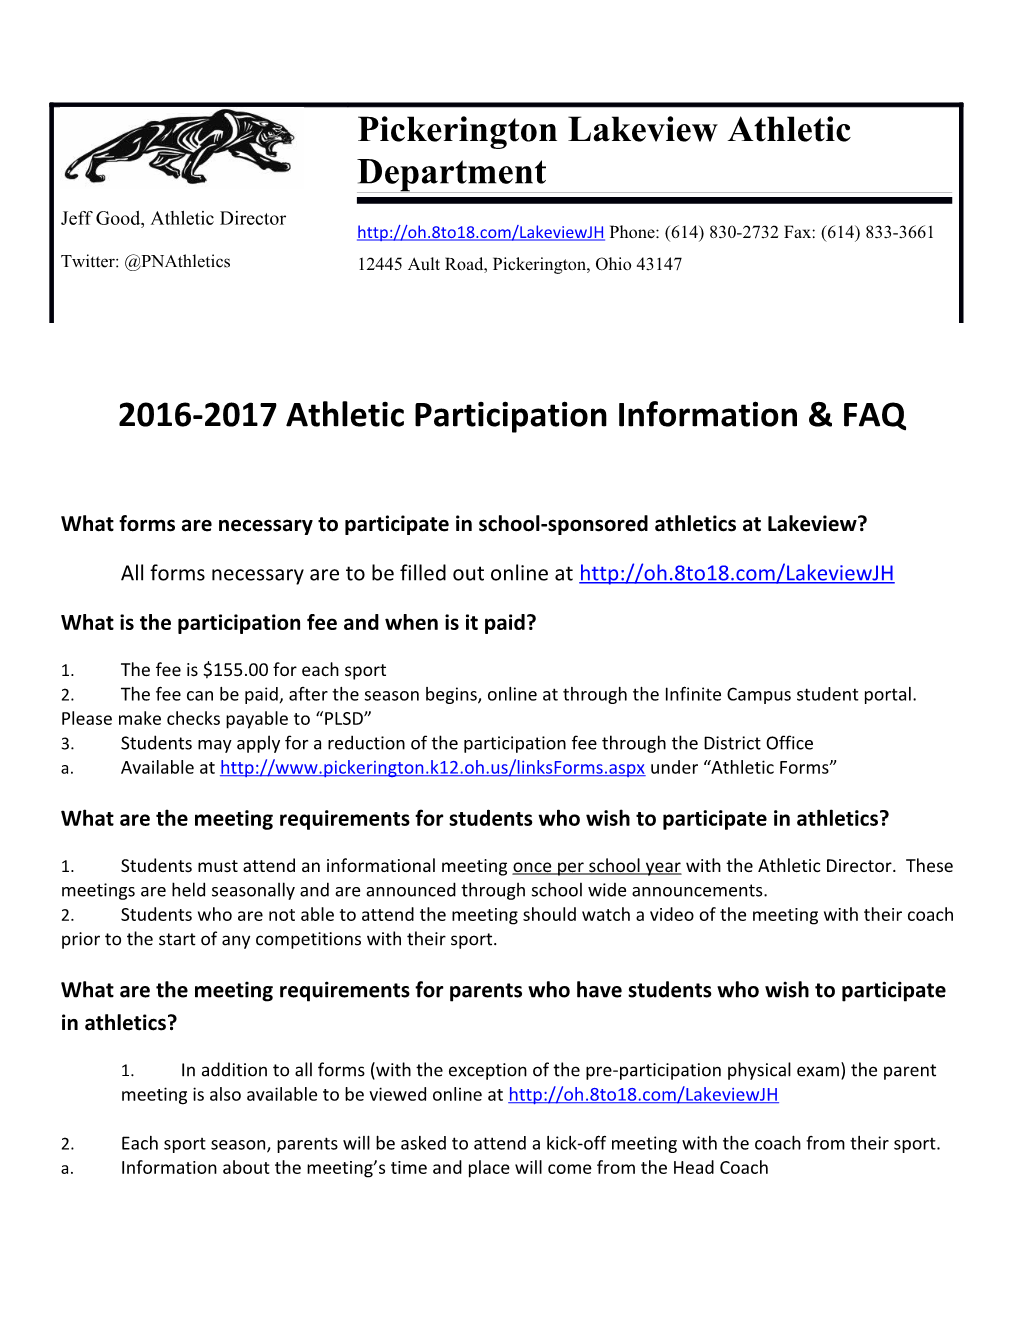 2016-2017 Athletic Participation Information & FAQ